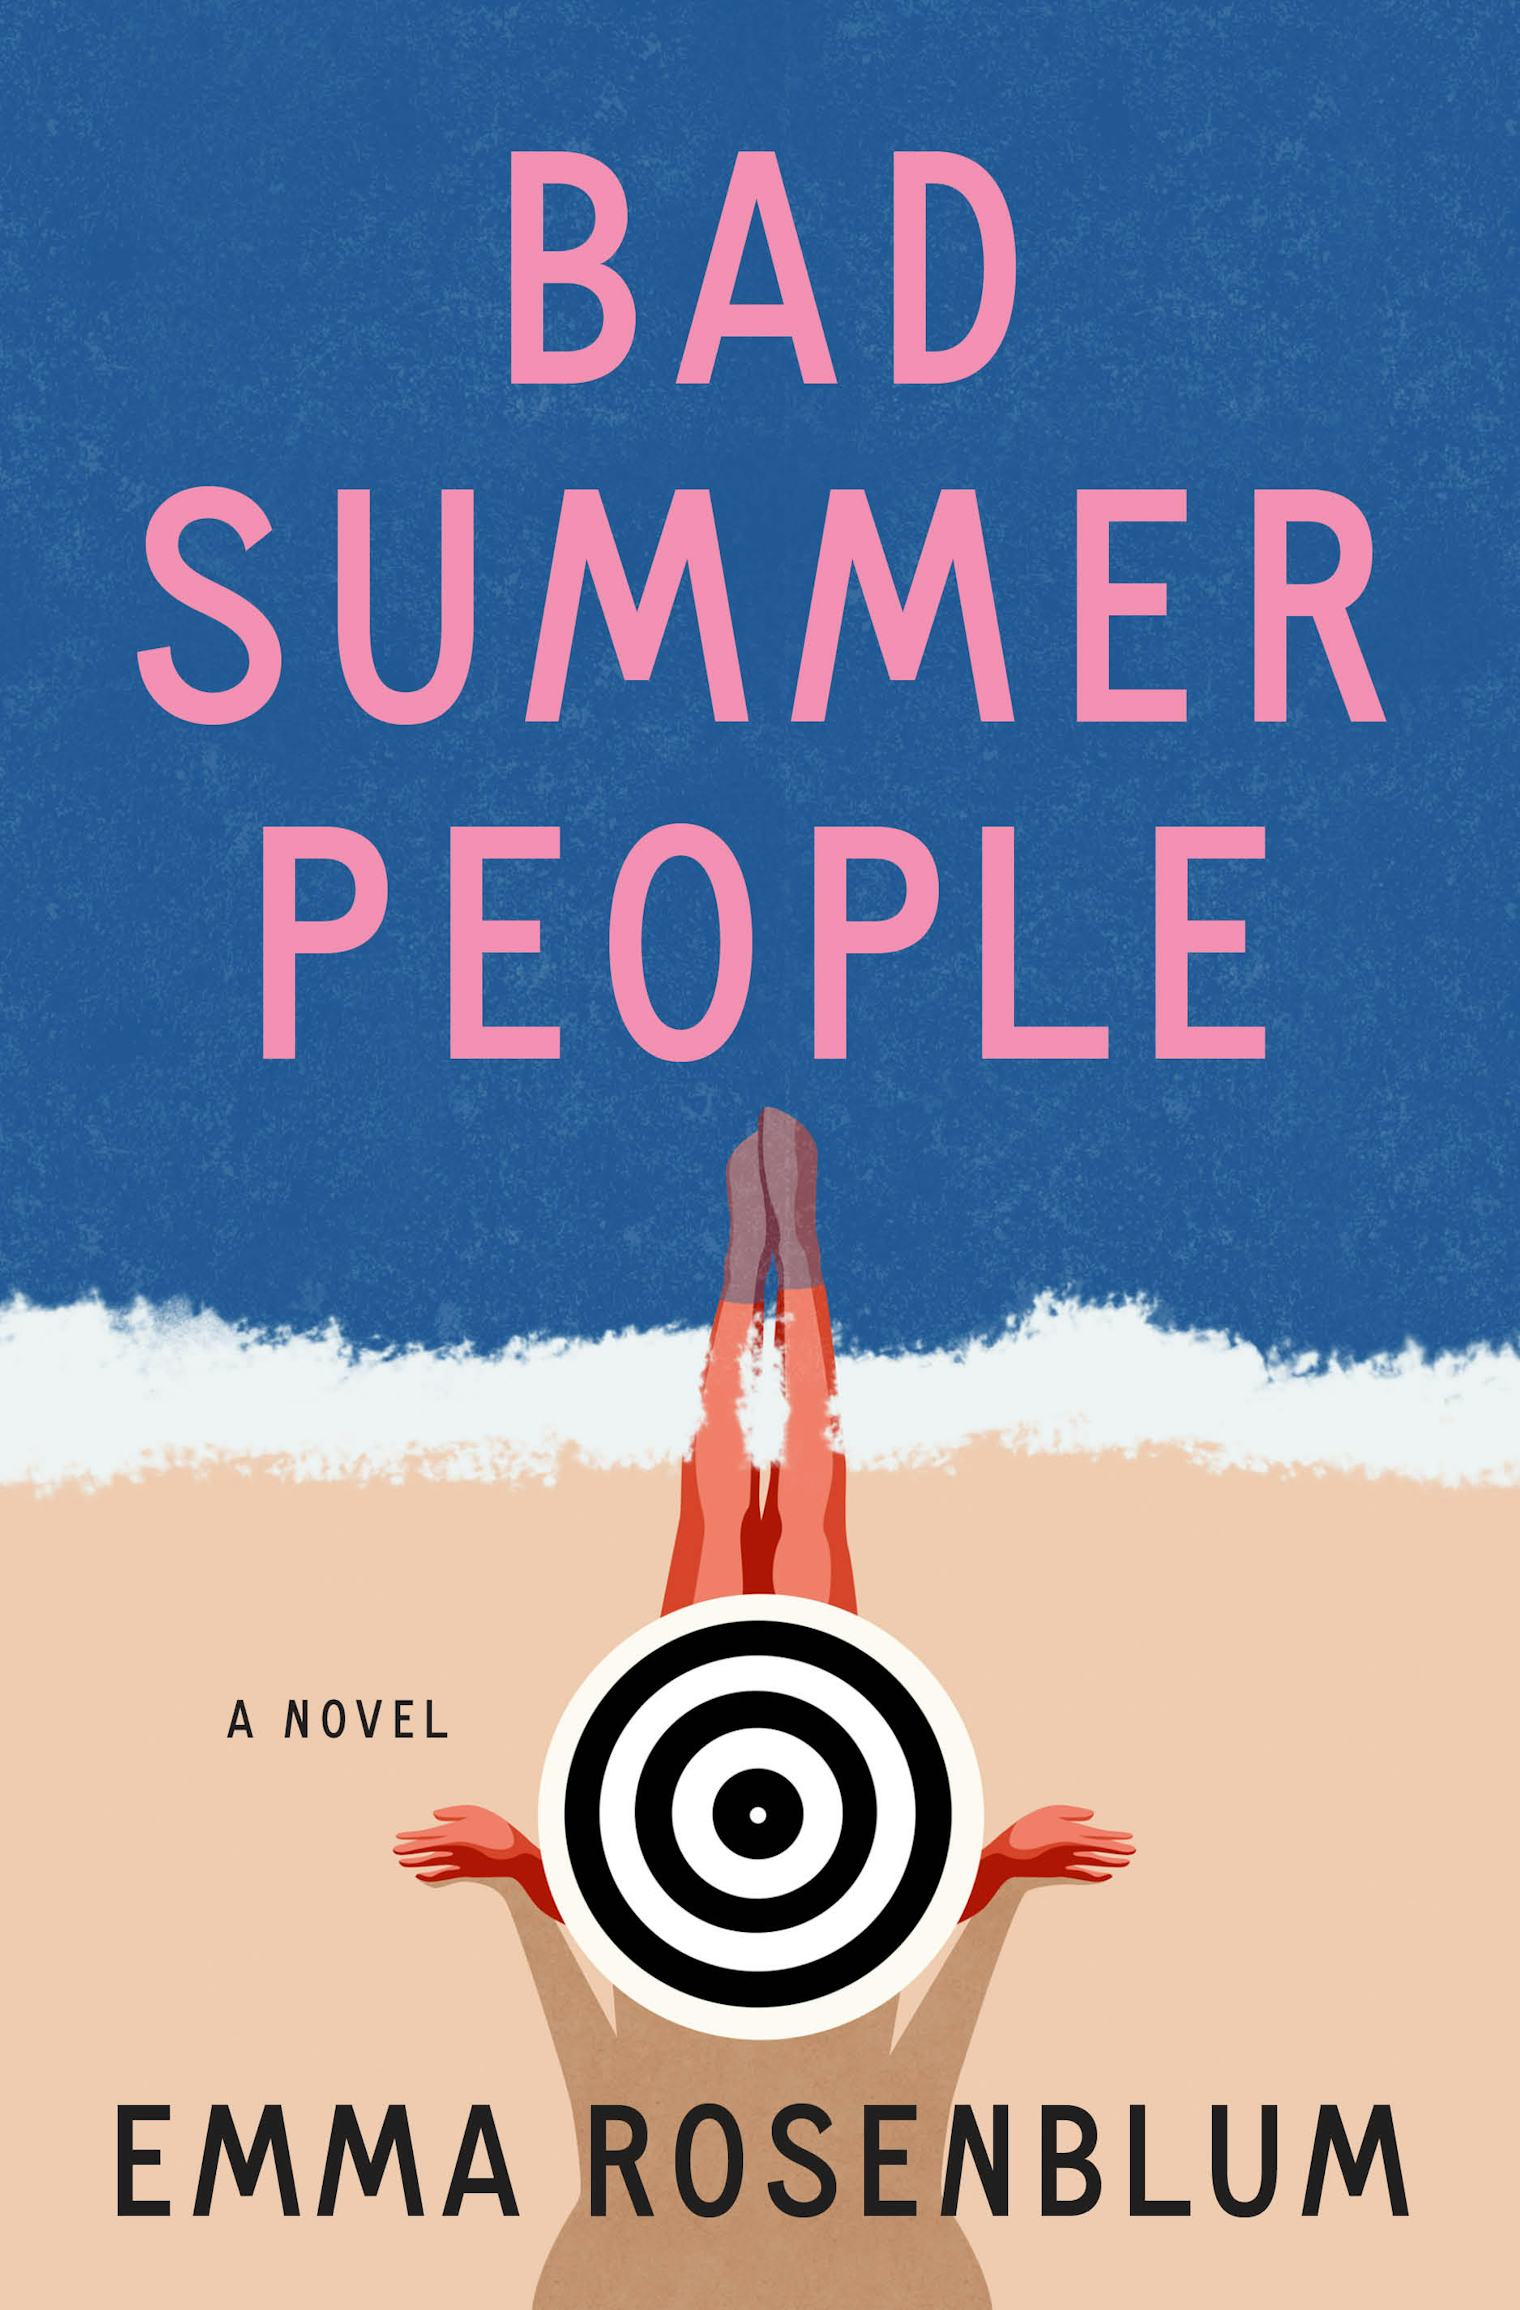 Exclusive Excerpt From Emma Rosenblum's 'Bad Summer People'